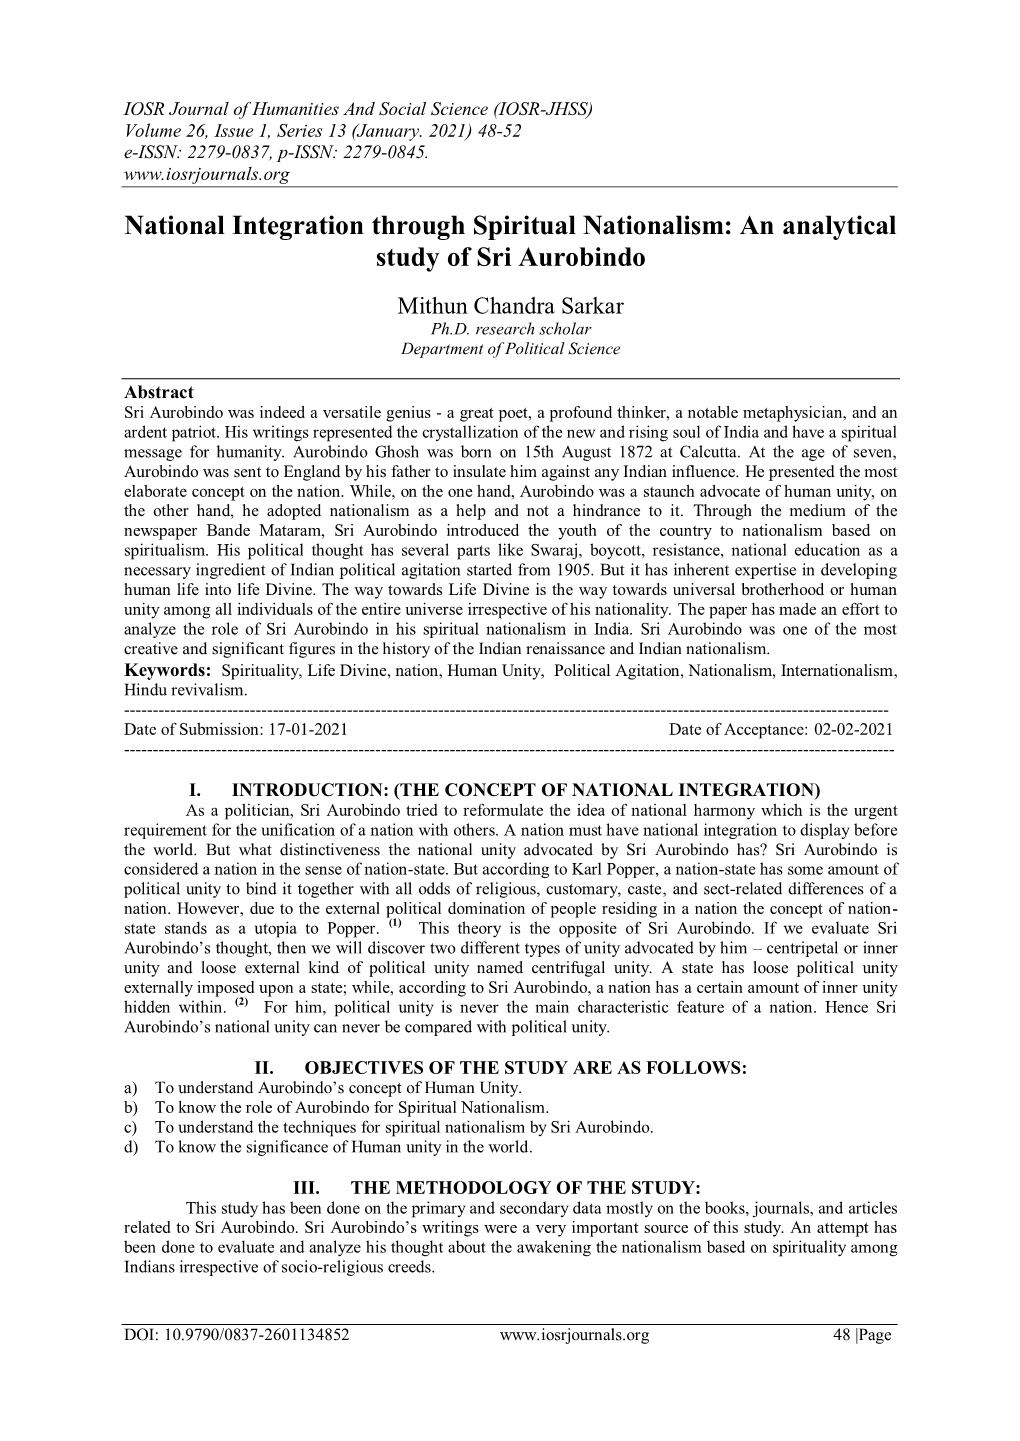 National Integration Through Spiritual Nationalism: an Analytical Study of Sri Aurobindo